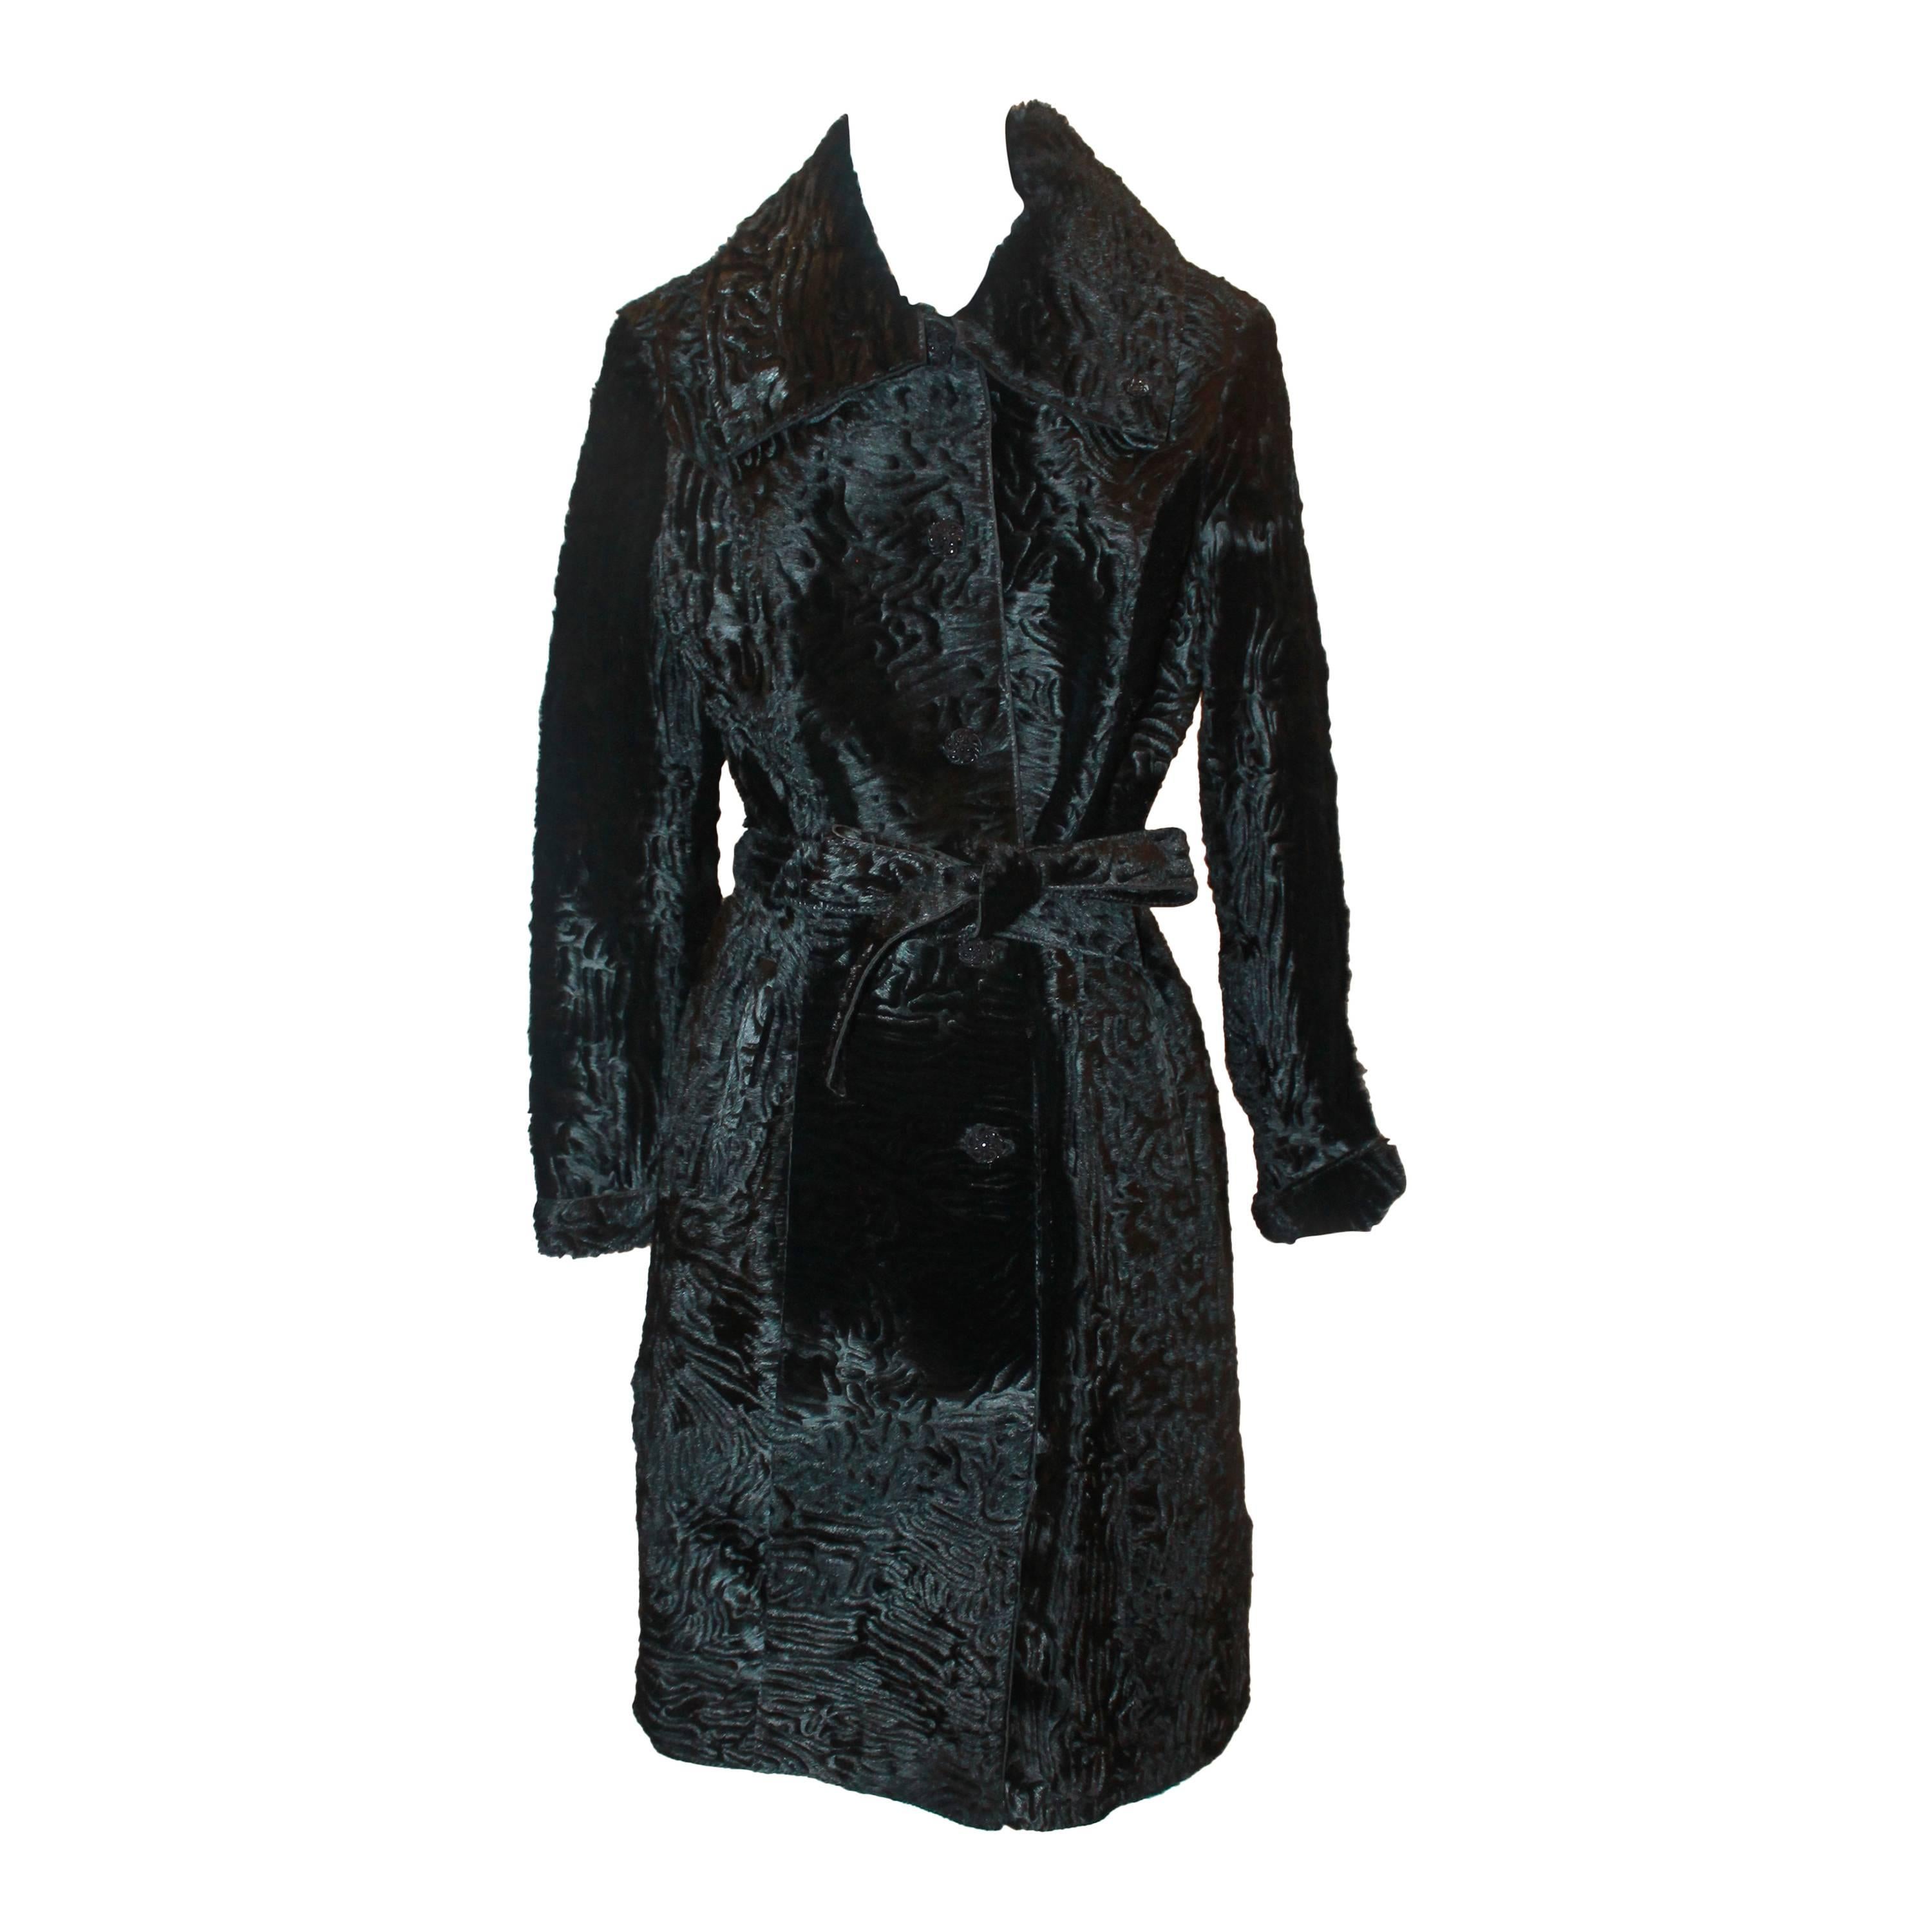 Marengo Black Broadtail Collared Full Coat with Belt - L